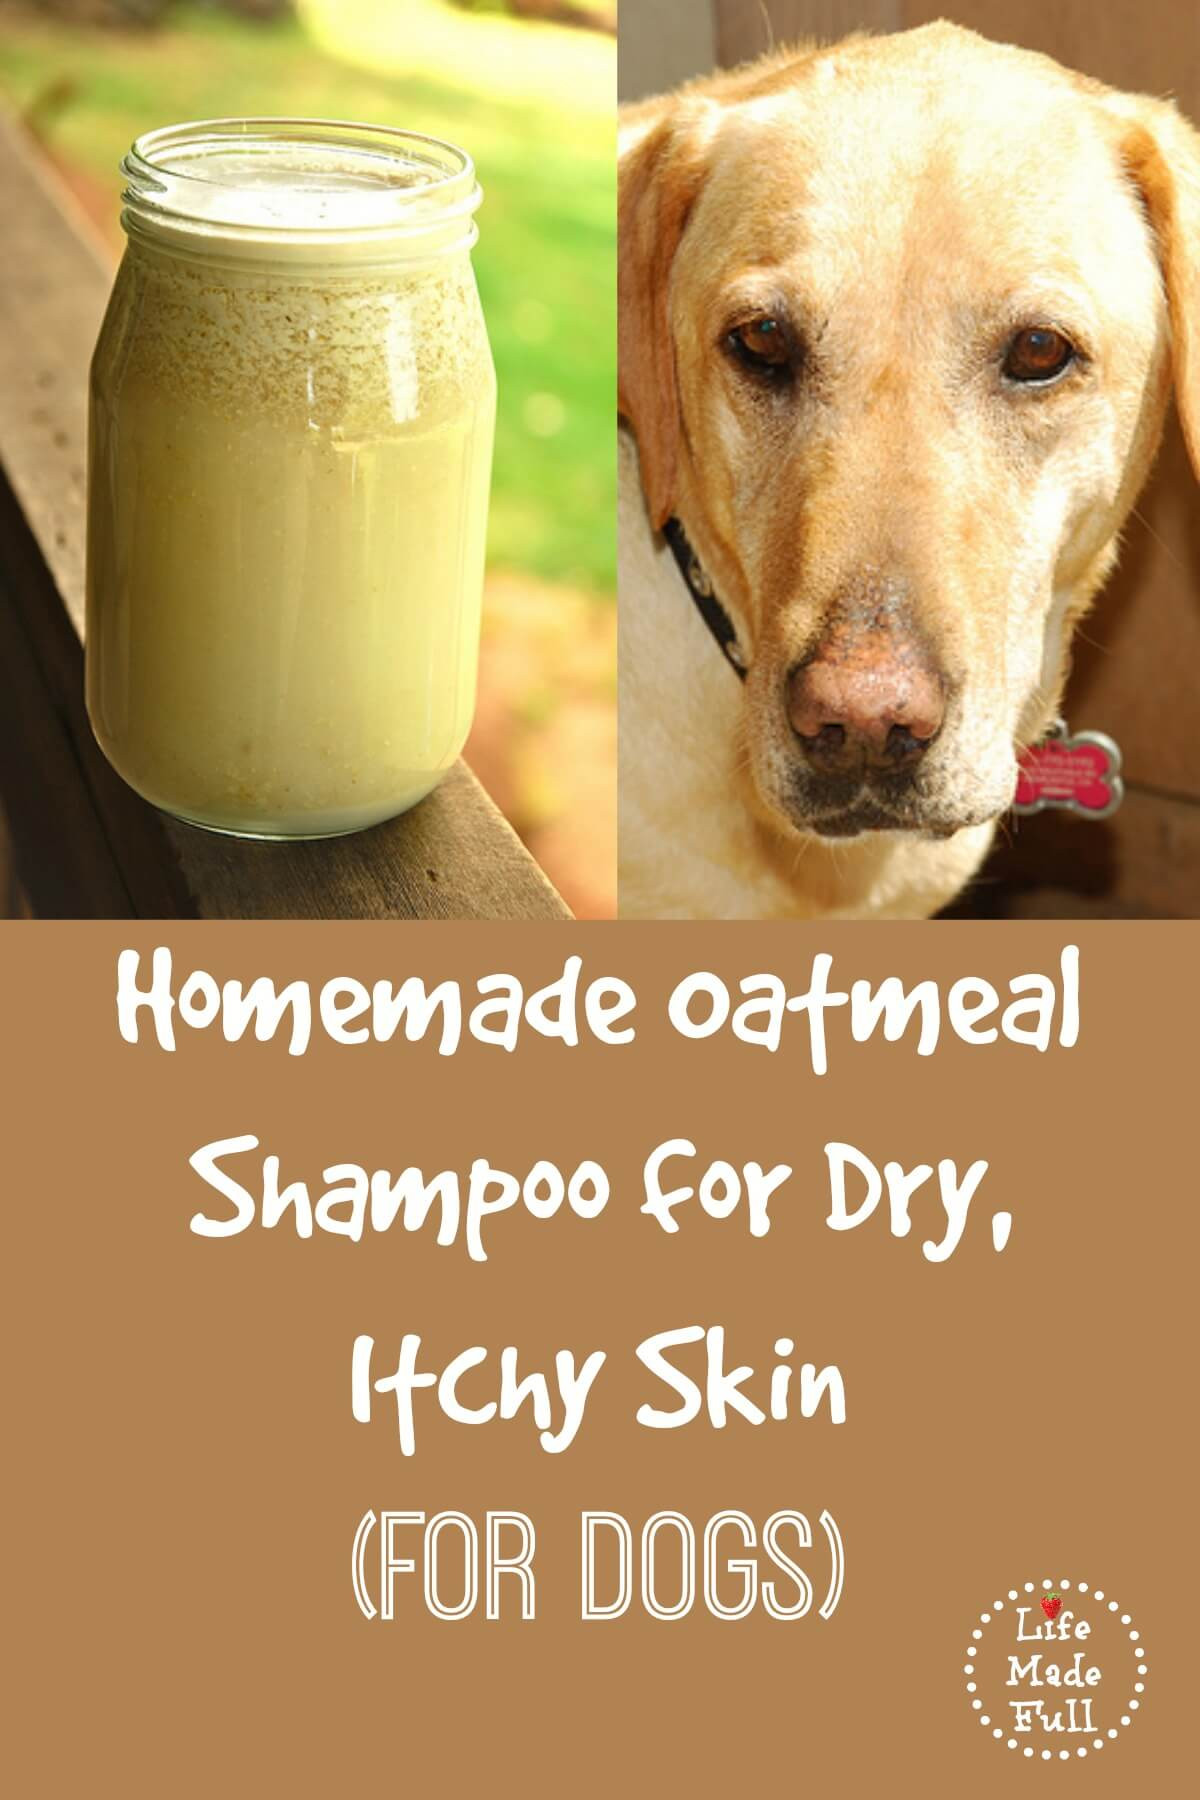 DIY Dry Dog Shampoo
 The Best Homemade Shampoo for Dogs